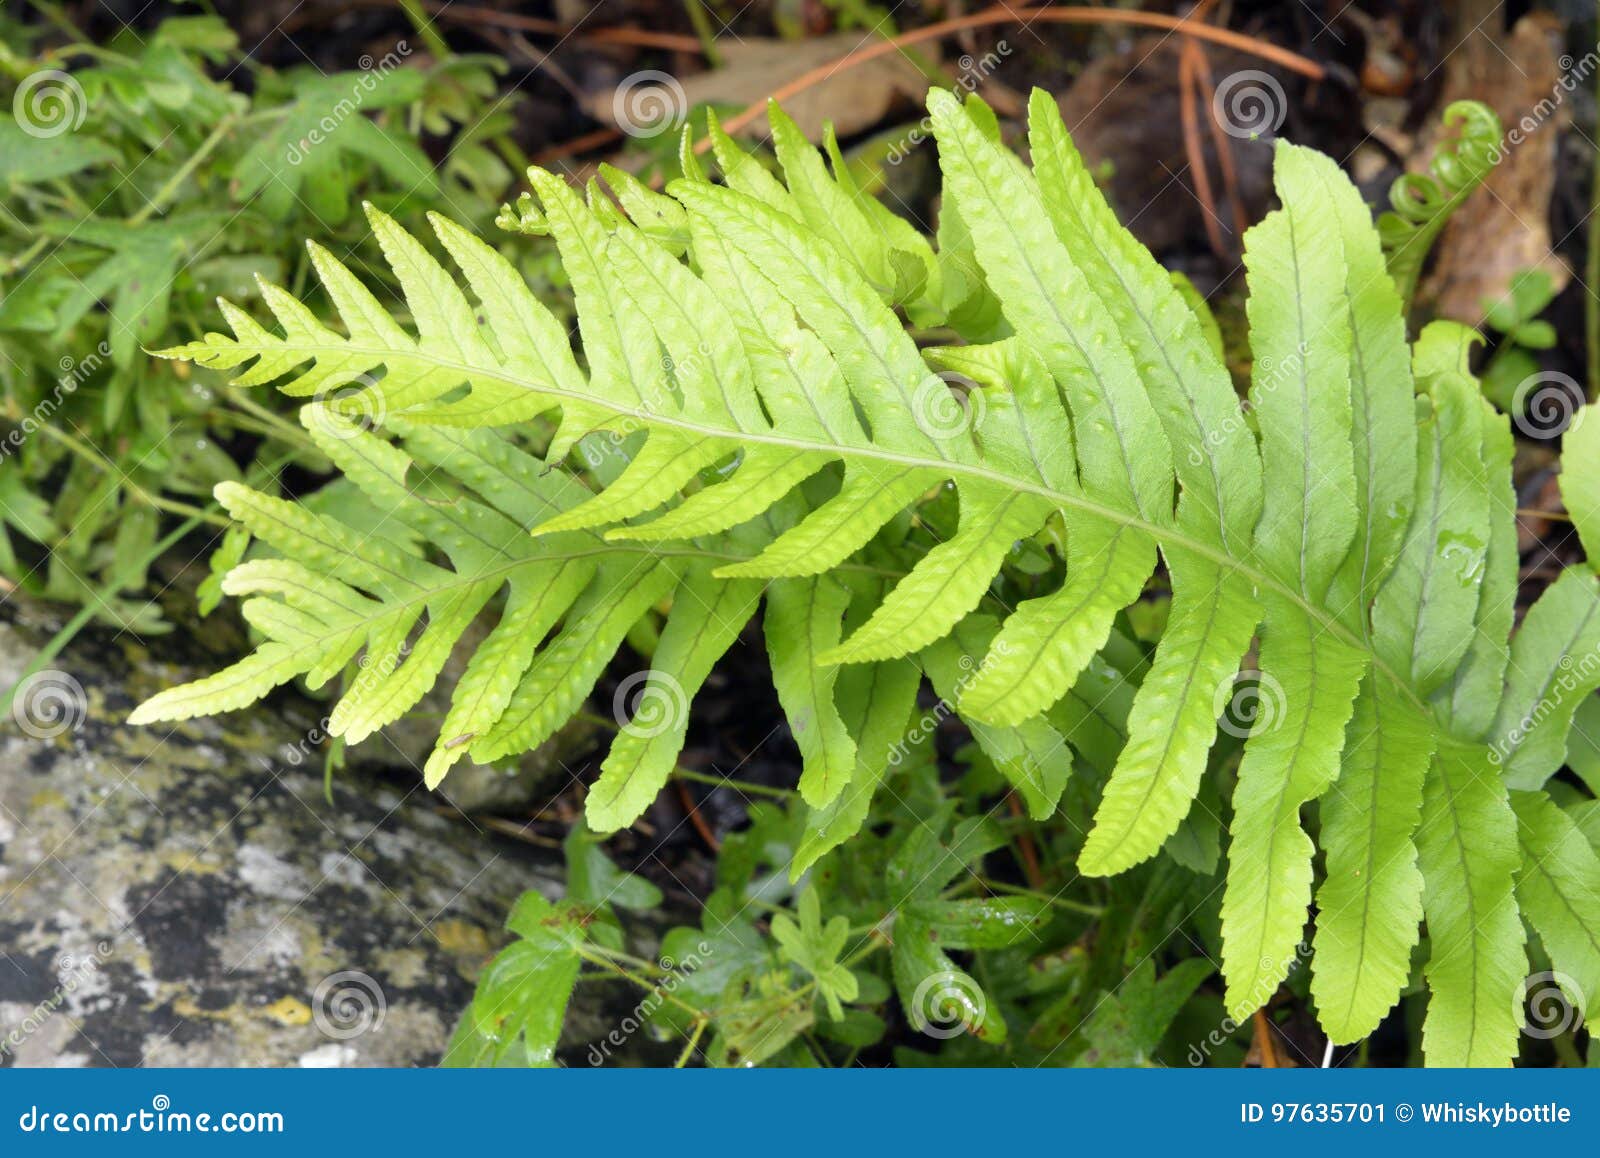 southern polypody fern